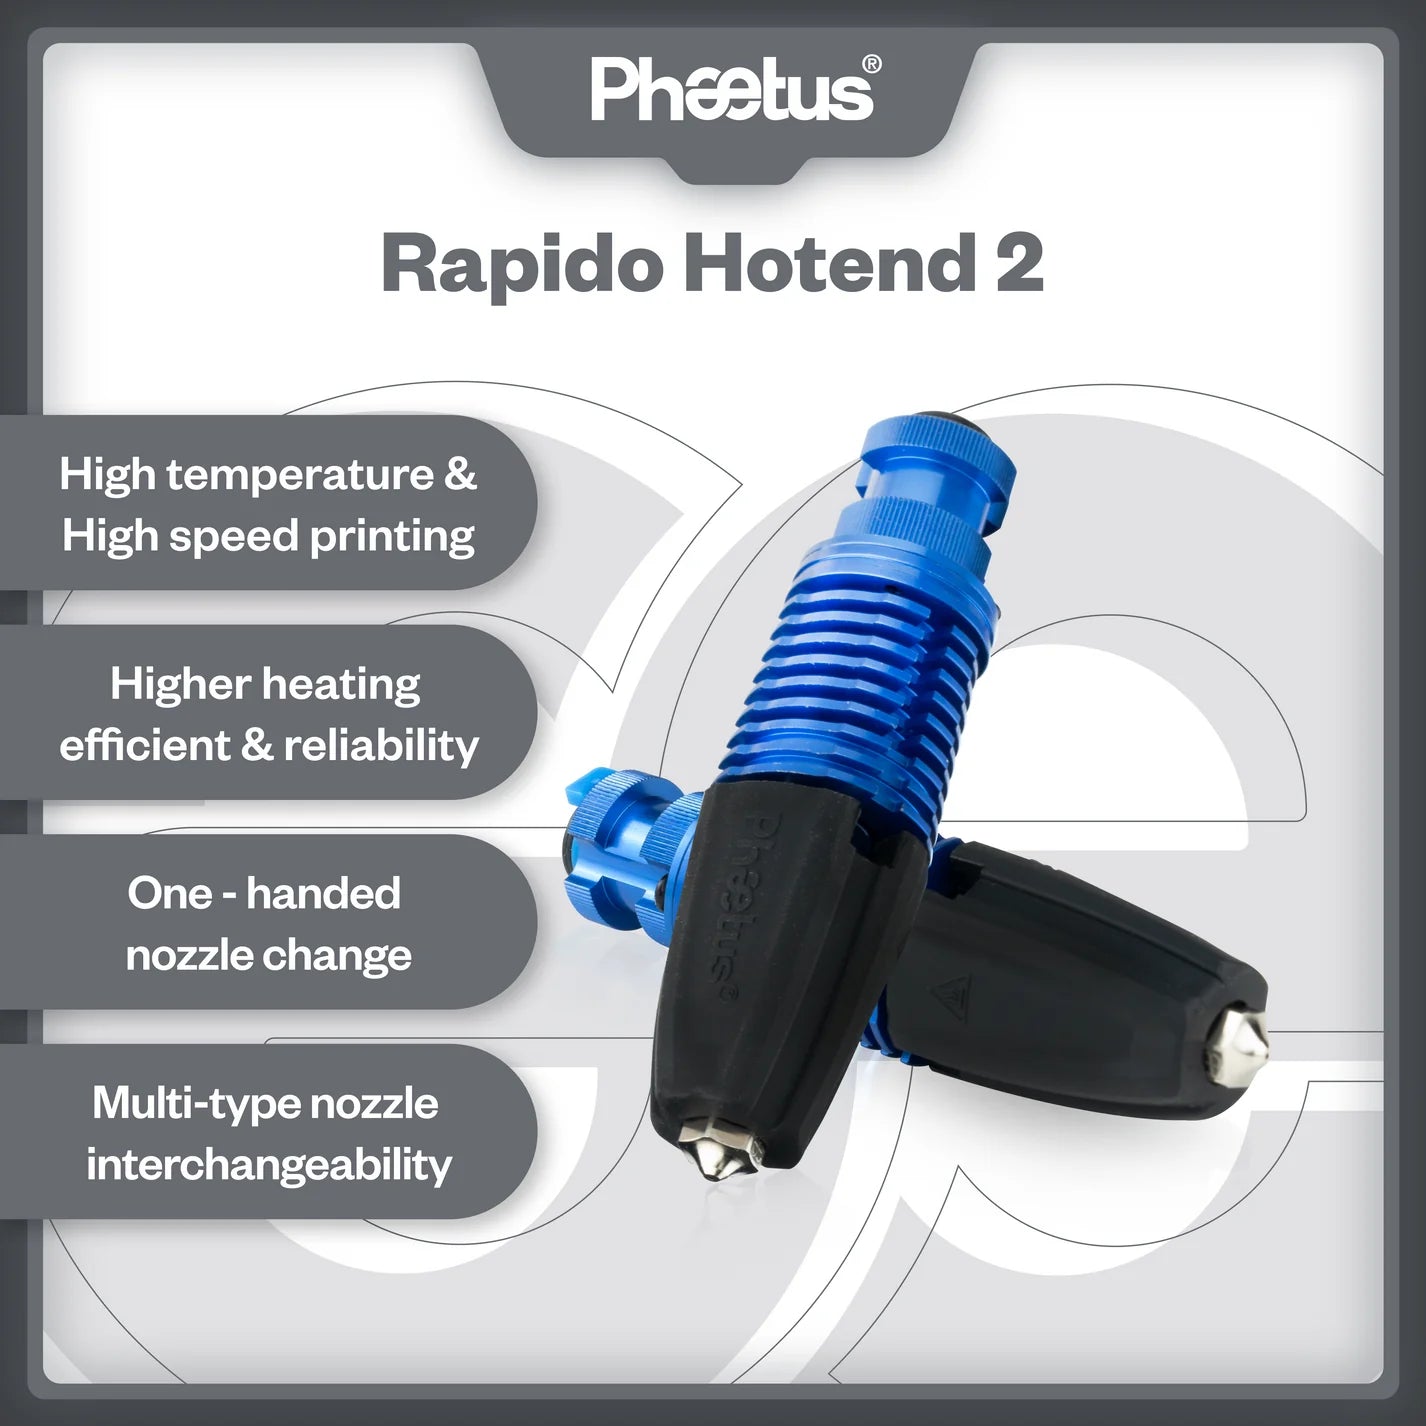 Phaetus Rapido Plus Hotend 2 (350 Degree Heater core)